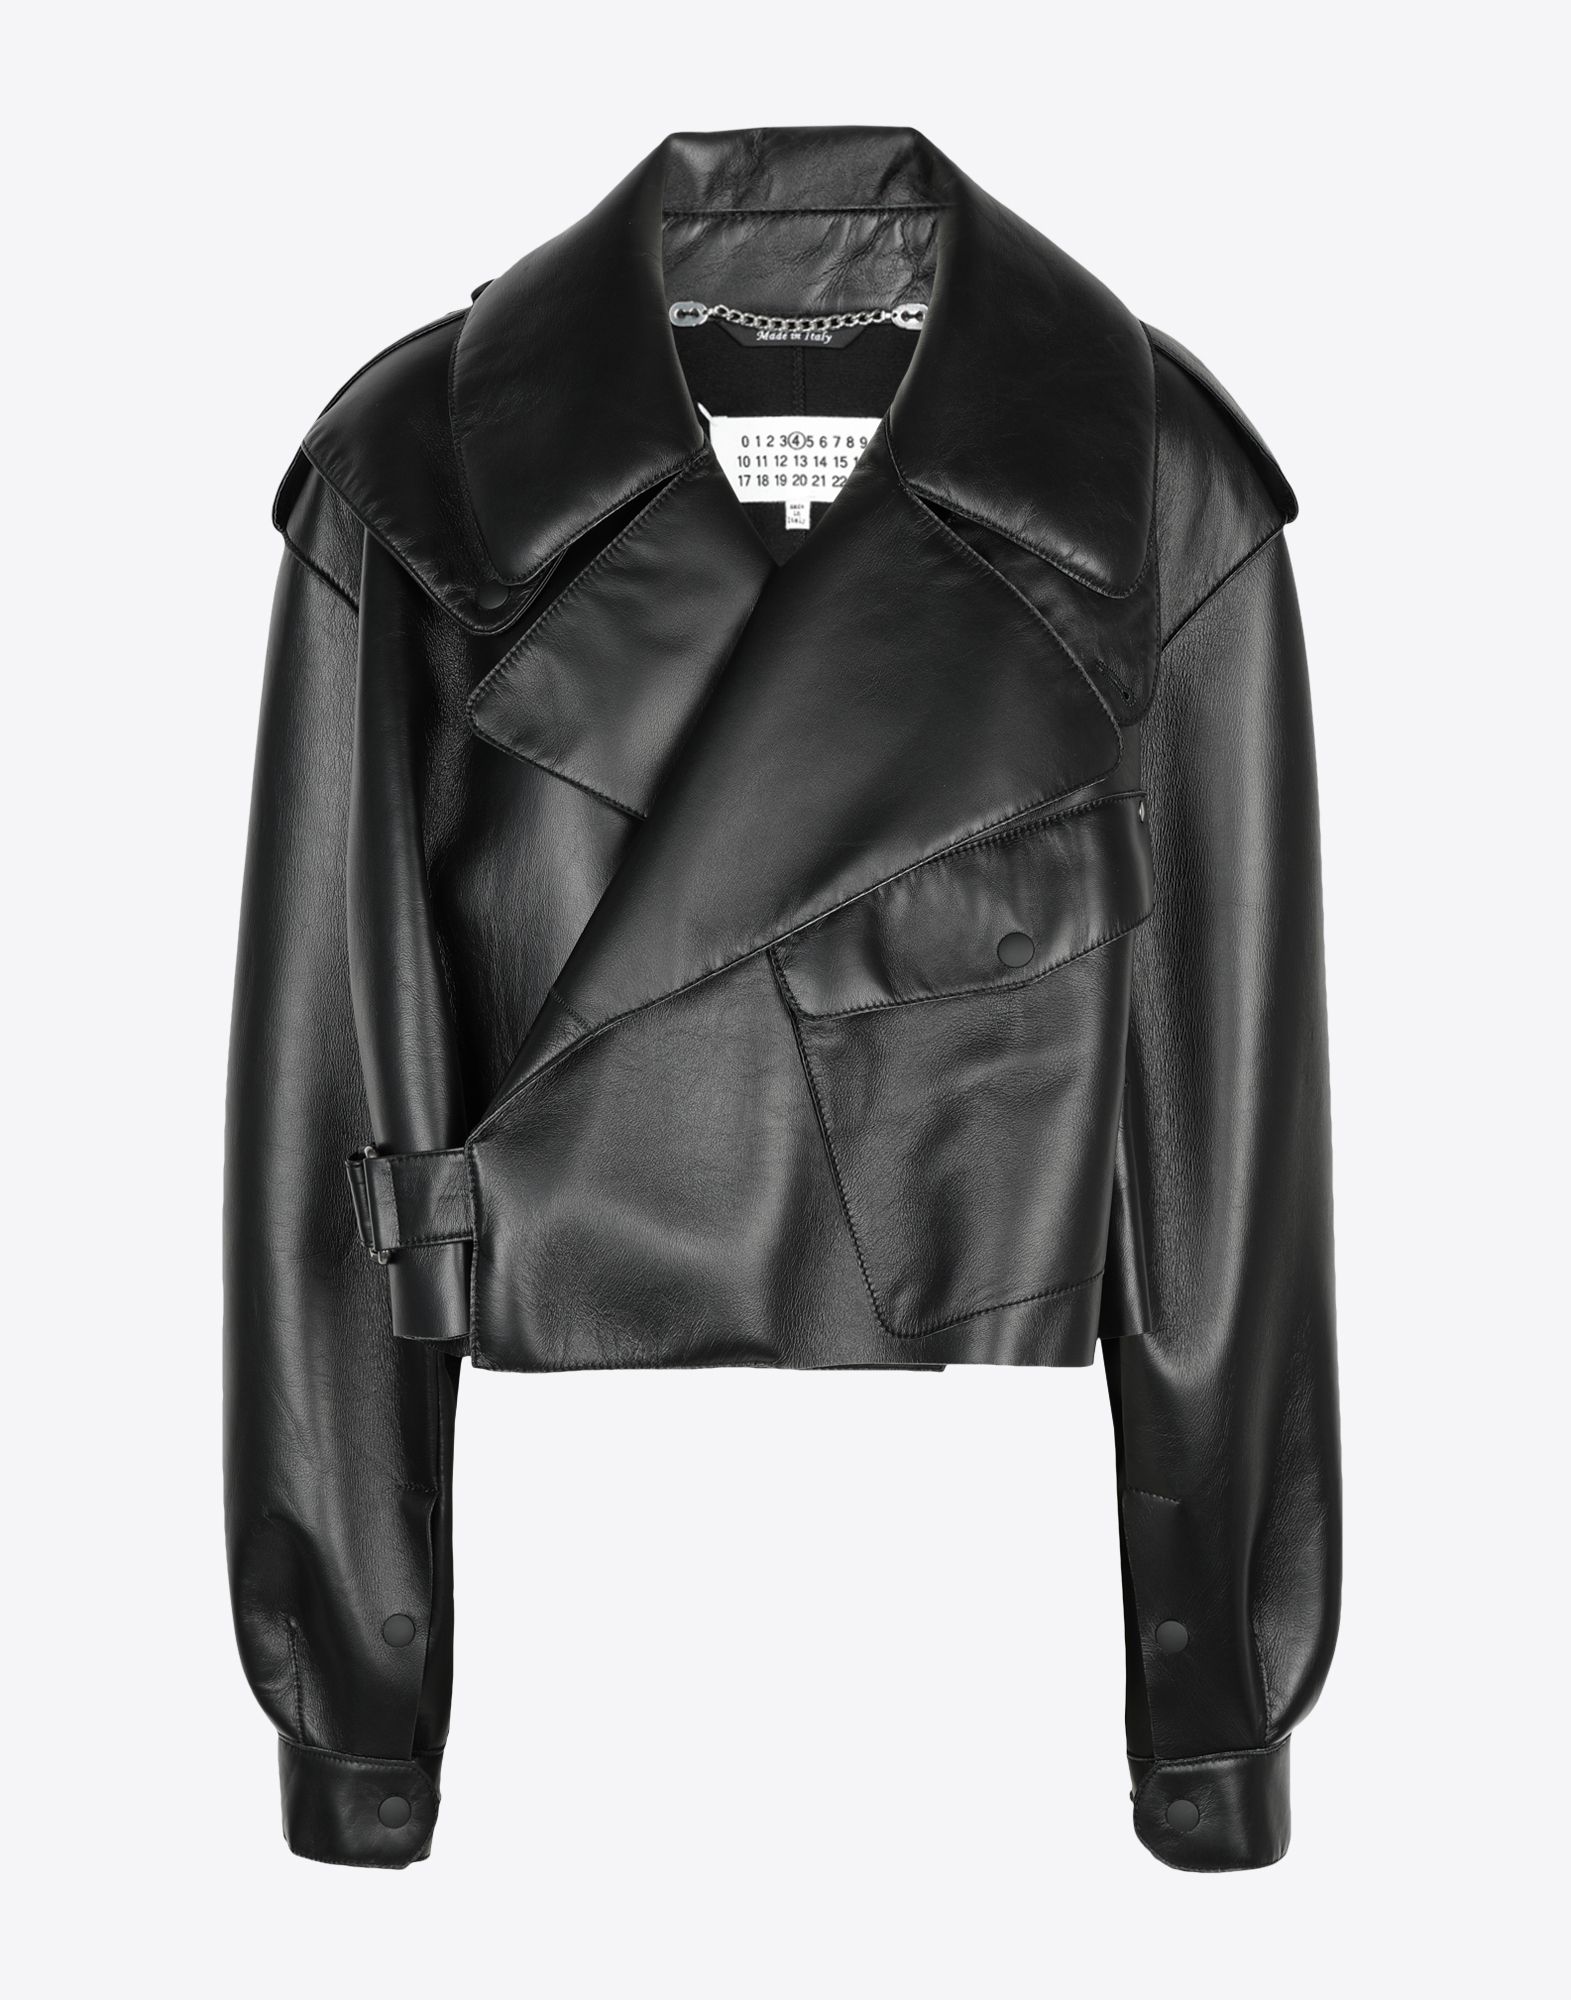 Maison Margiela Leather Bomber Winter Coats: Fashion Forward Options You'll Love